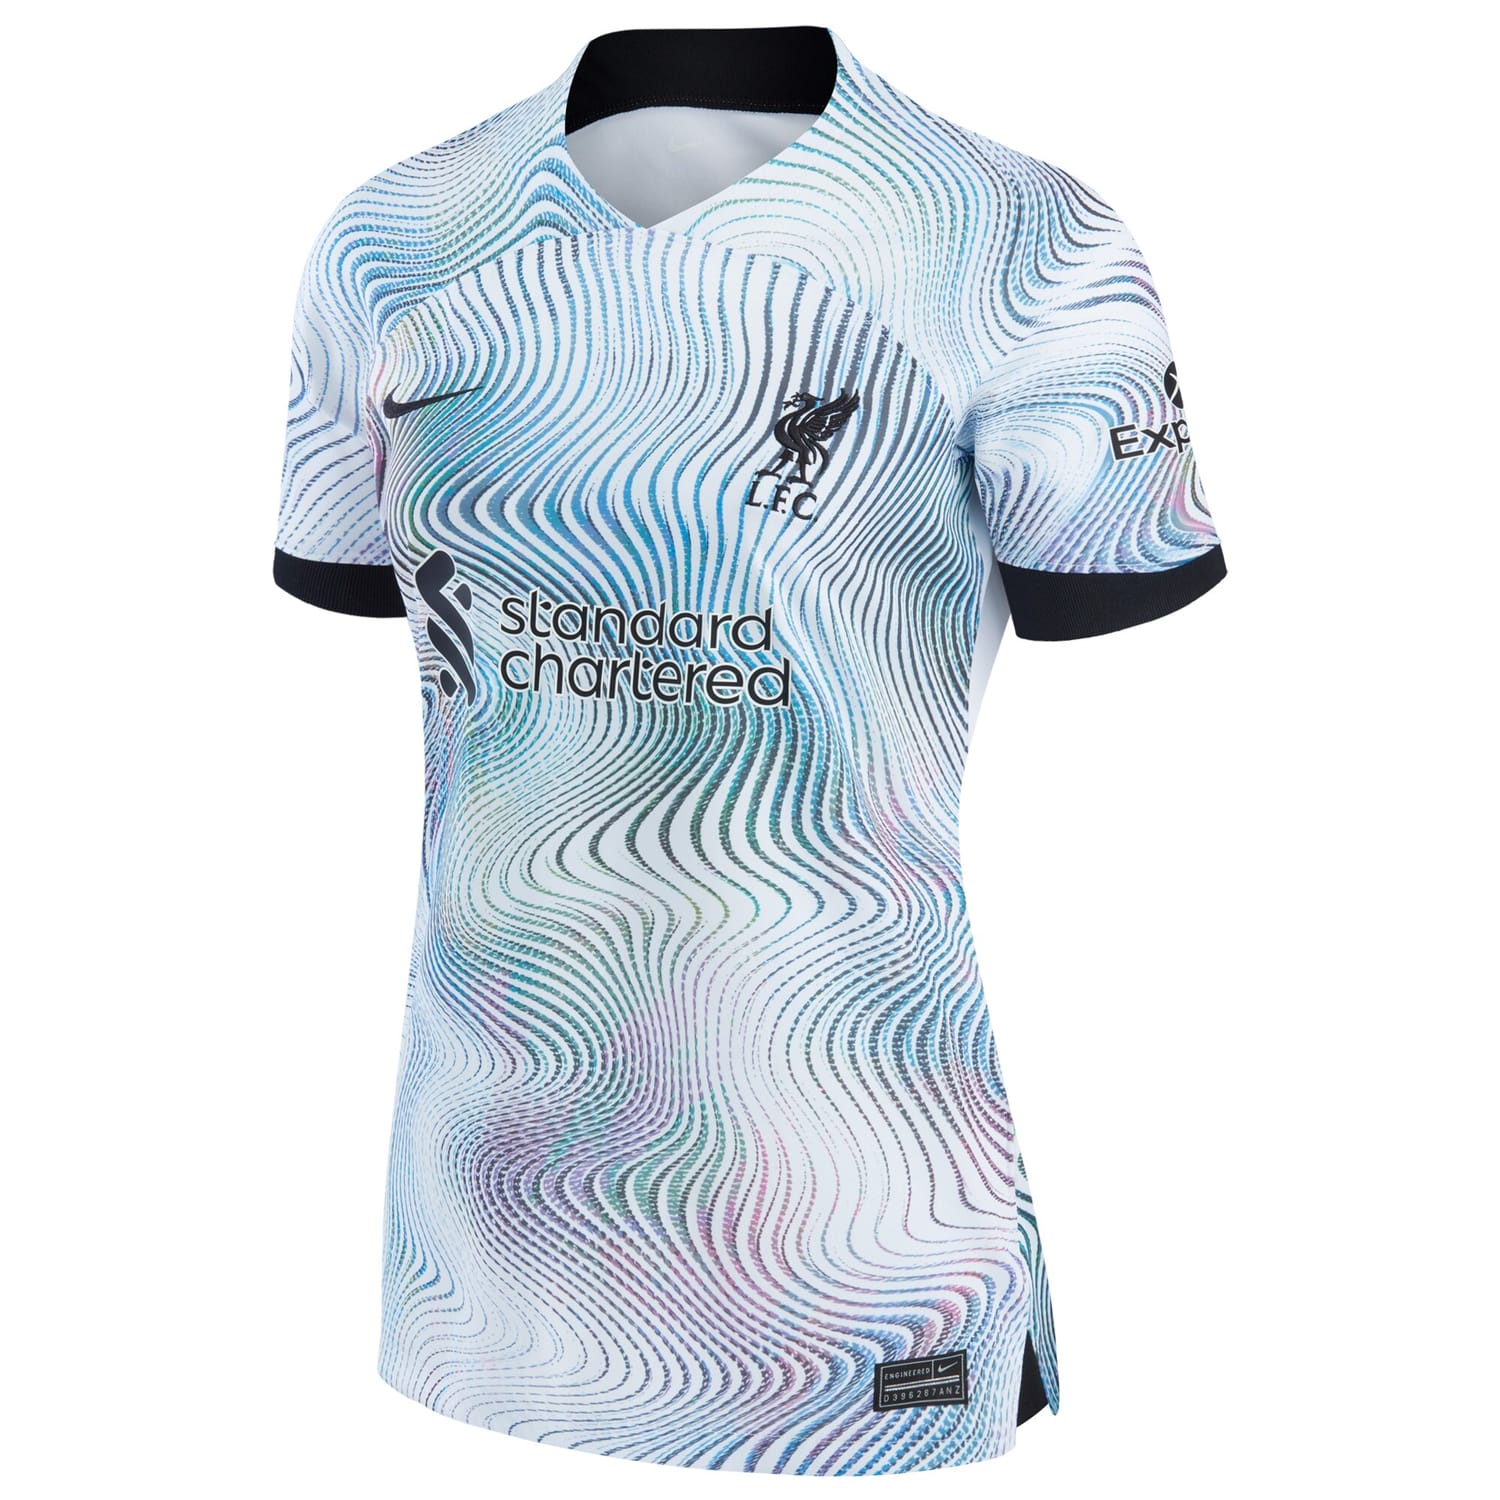 Premier League Liverpool Away Jersey Shirt 2022-23 player Thiago 6 printing for Women